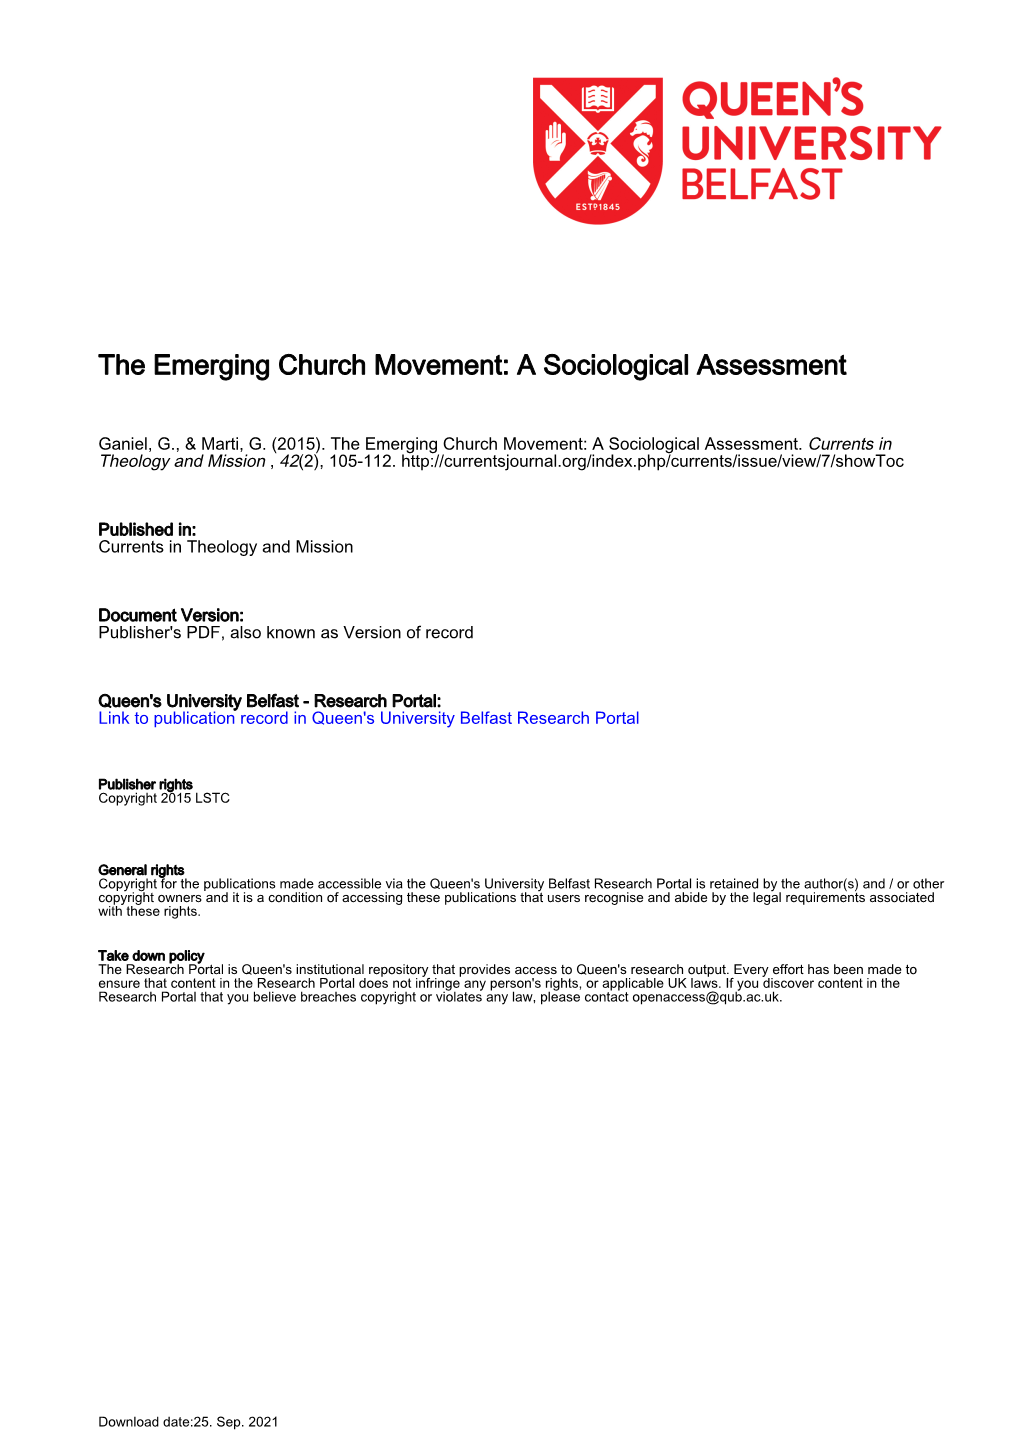 The Emerging Church Movement: a Sociological Assessment